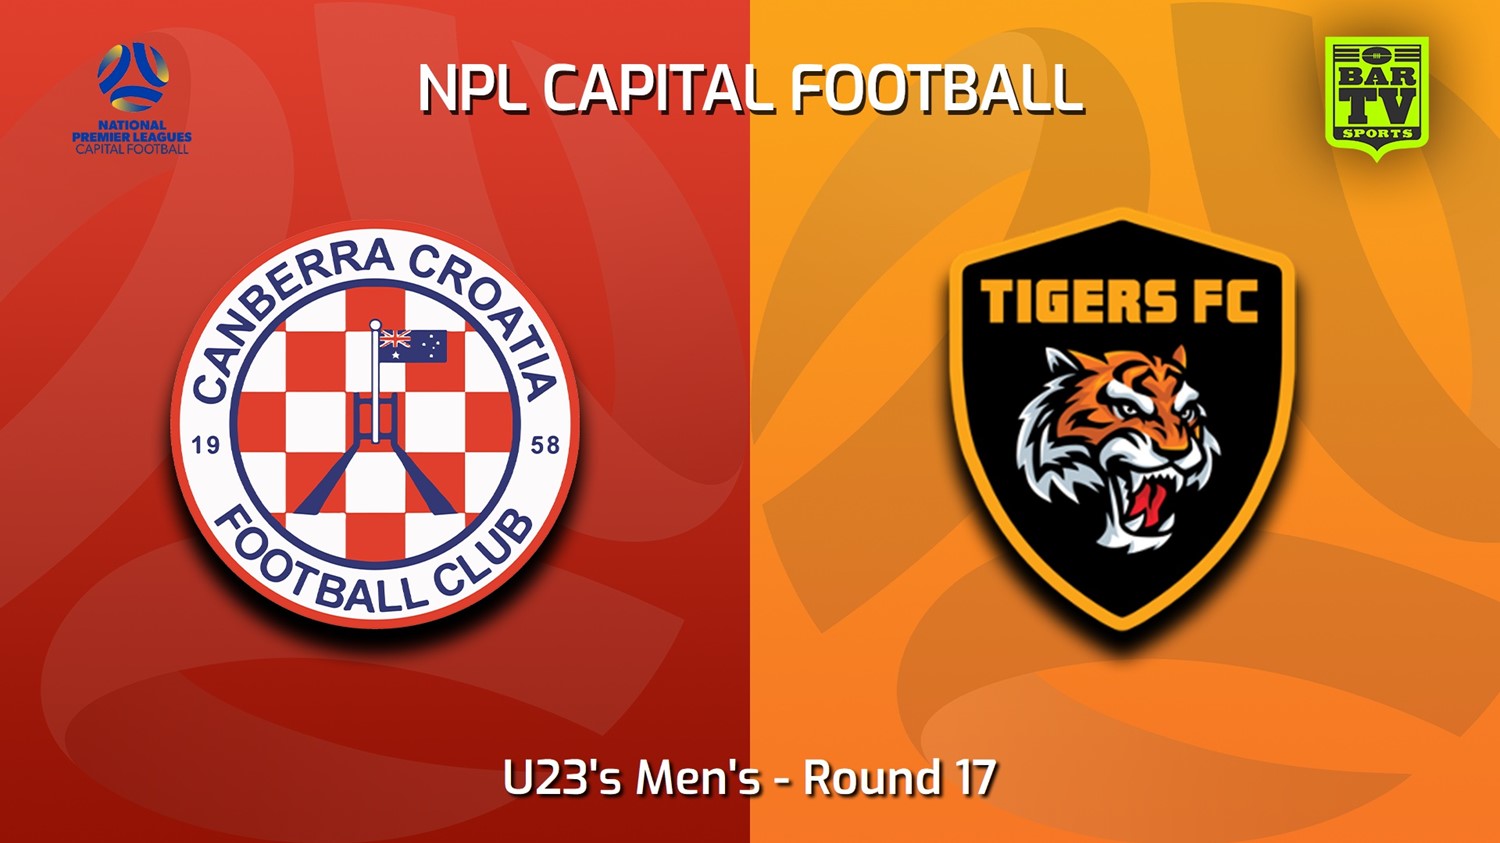 230806-Capital NPL U23 Round 17 - Canberra Croatia FC U23 v Tigers FC U23 Slate Image